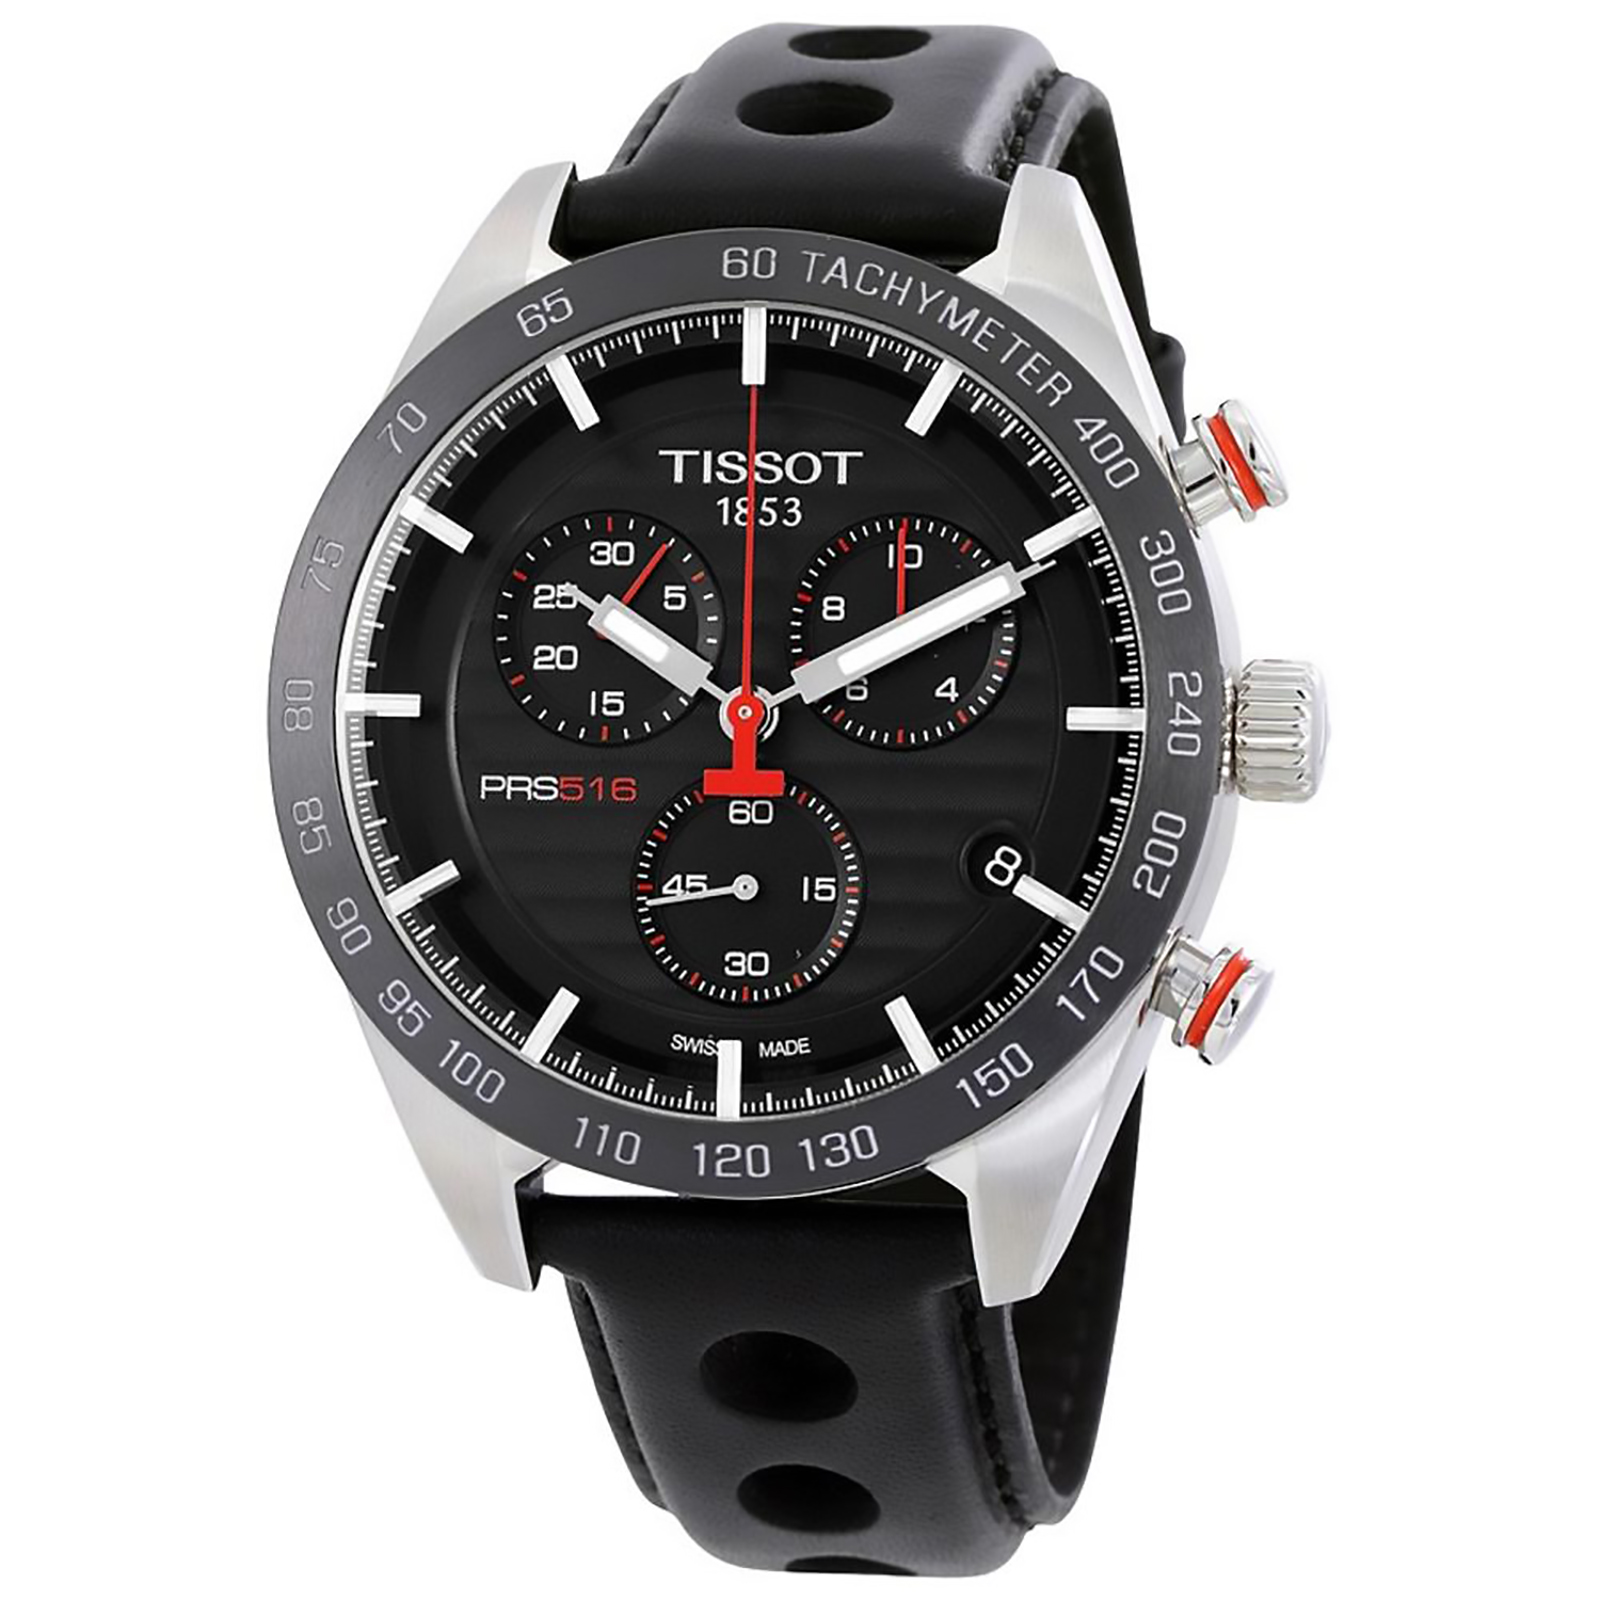 Tissot T100.417.16.051.00 Men’s PRS 516 Leather Watch - Black